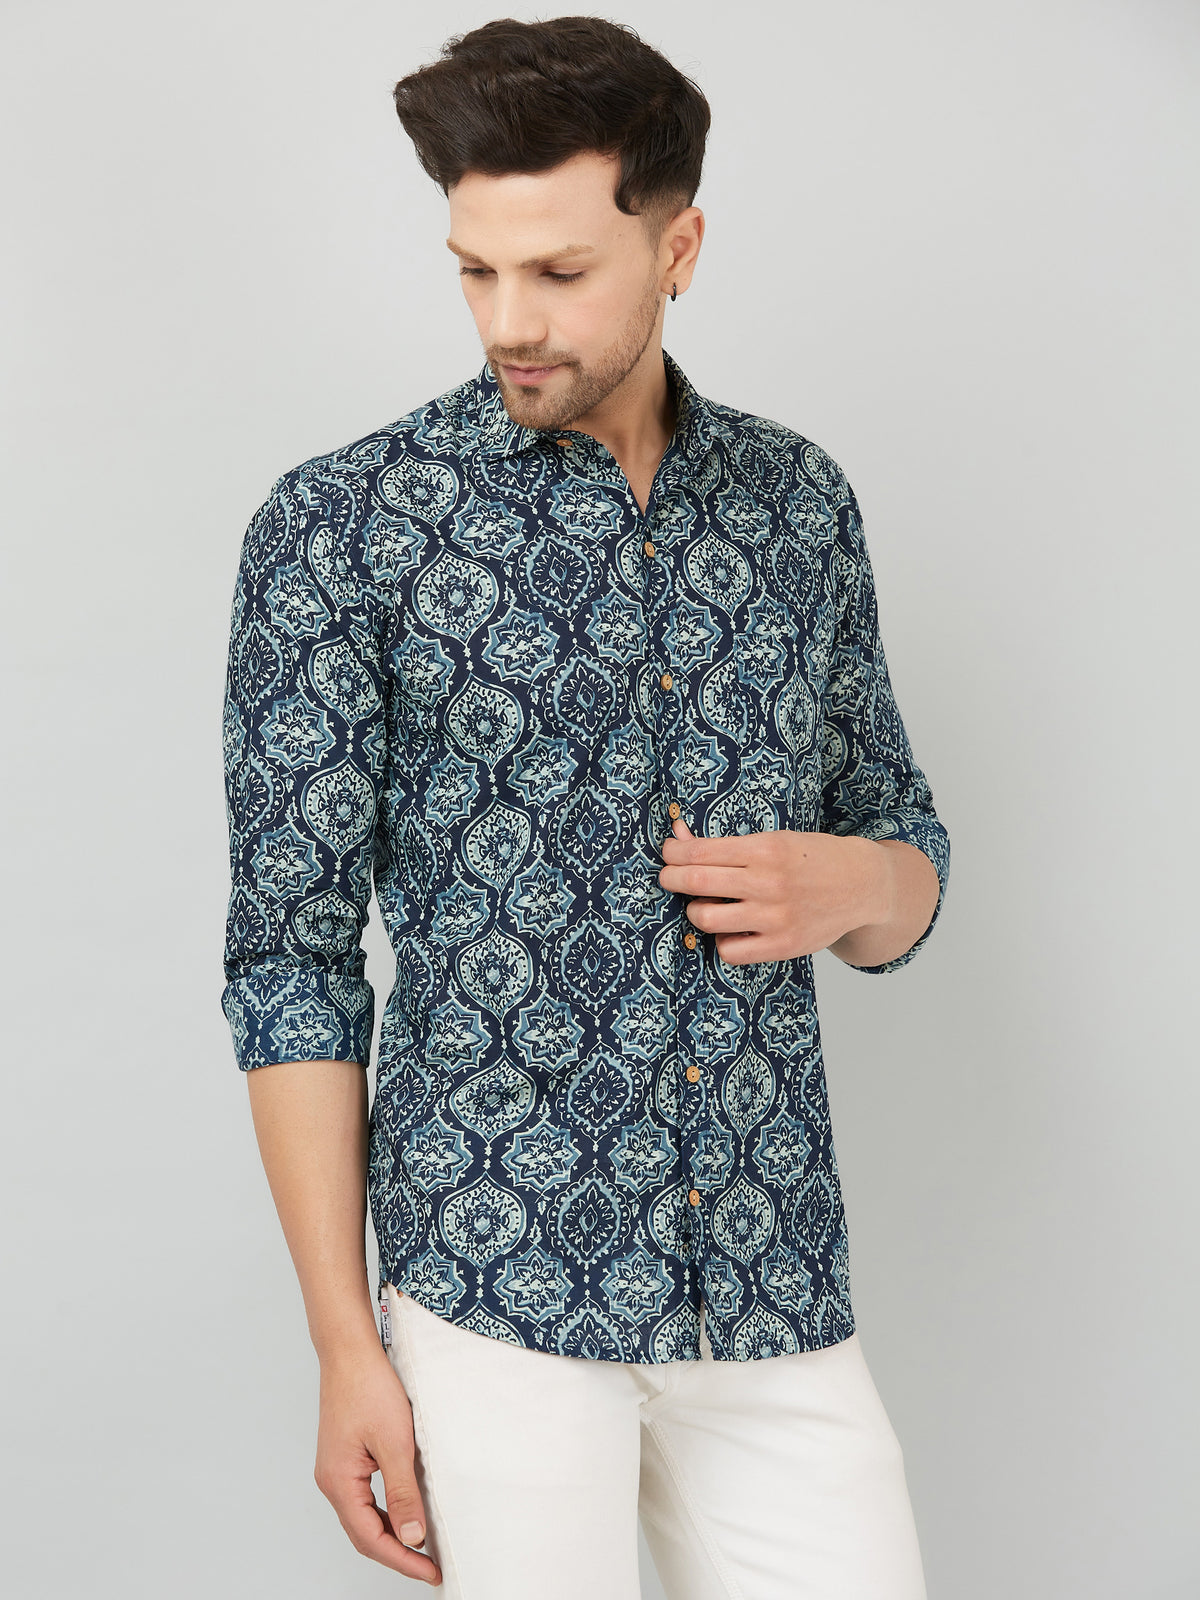 Louis Monarch Premium Navy Blue Jaipuri Printed Cotton Casual Shirt